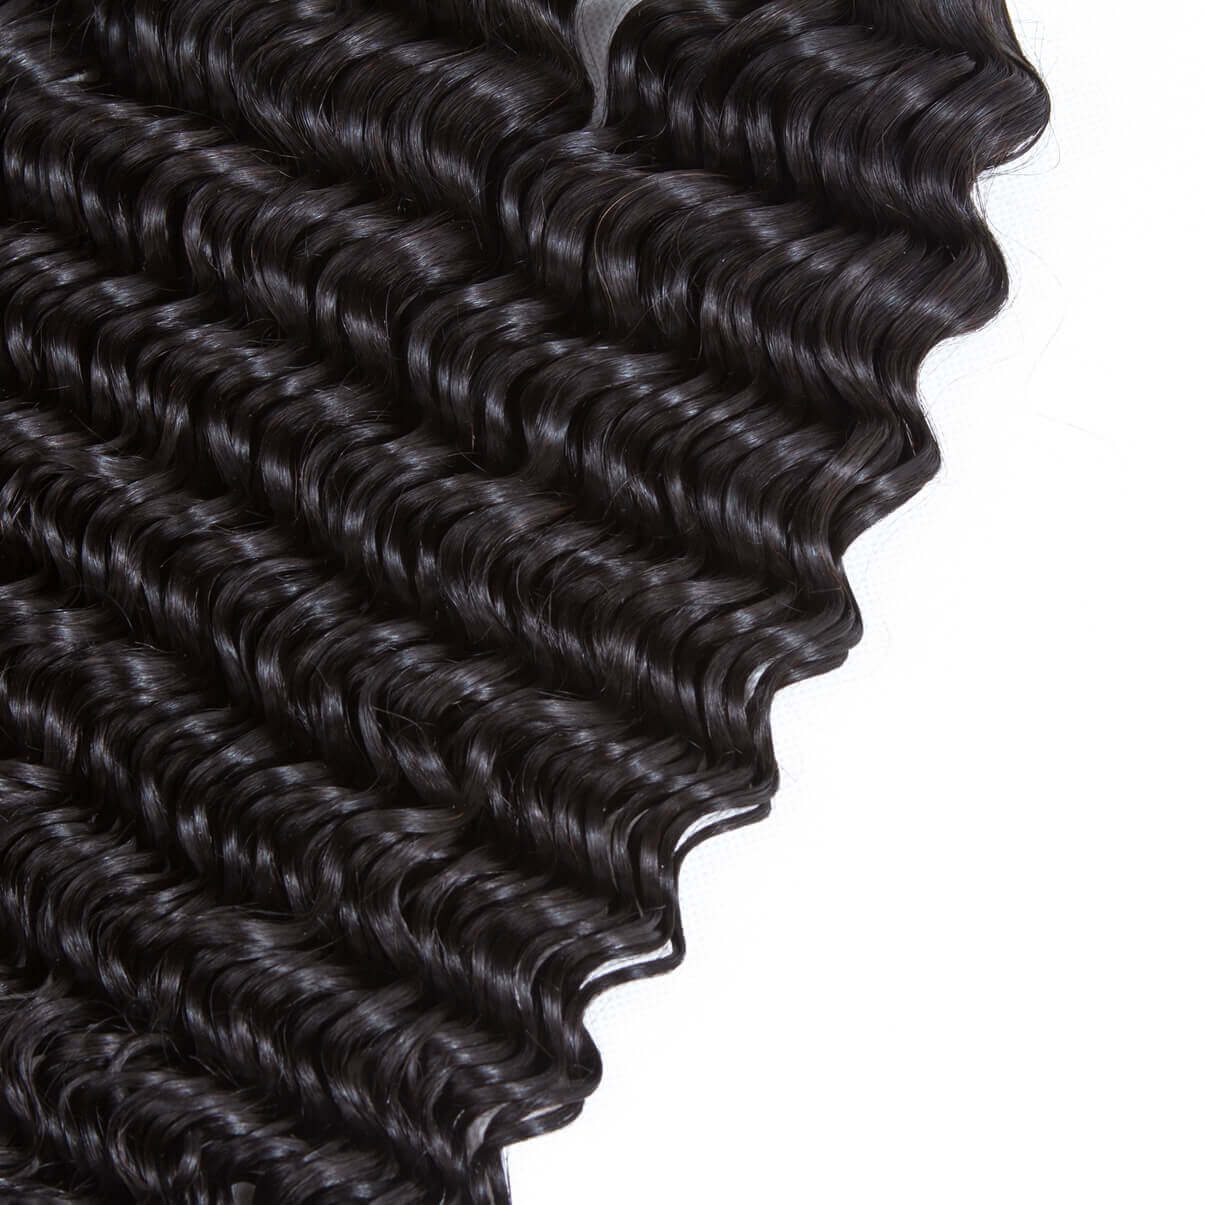 Lakihair 8A Virgin Human Hair Brazilian Deep Wave 4 Bundles With Lace Frontal Closure 13x4